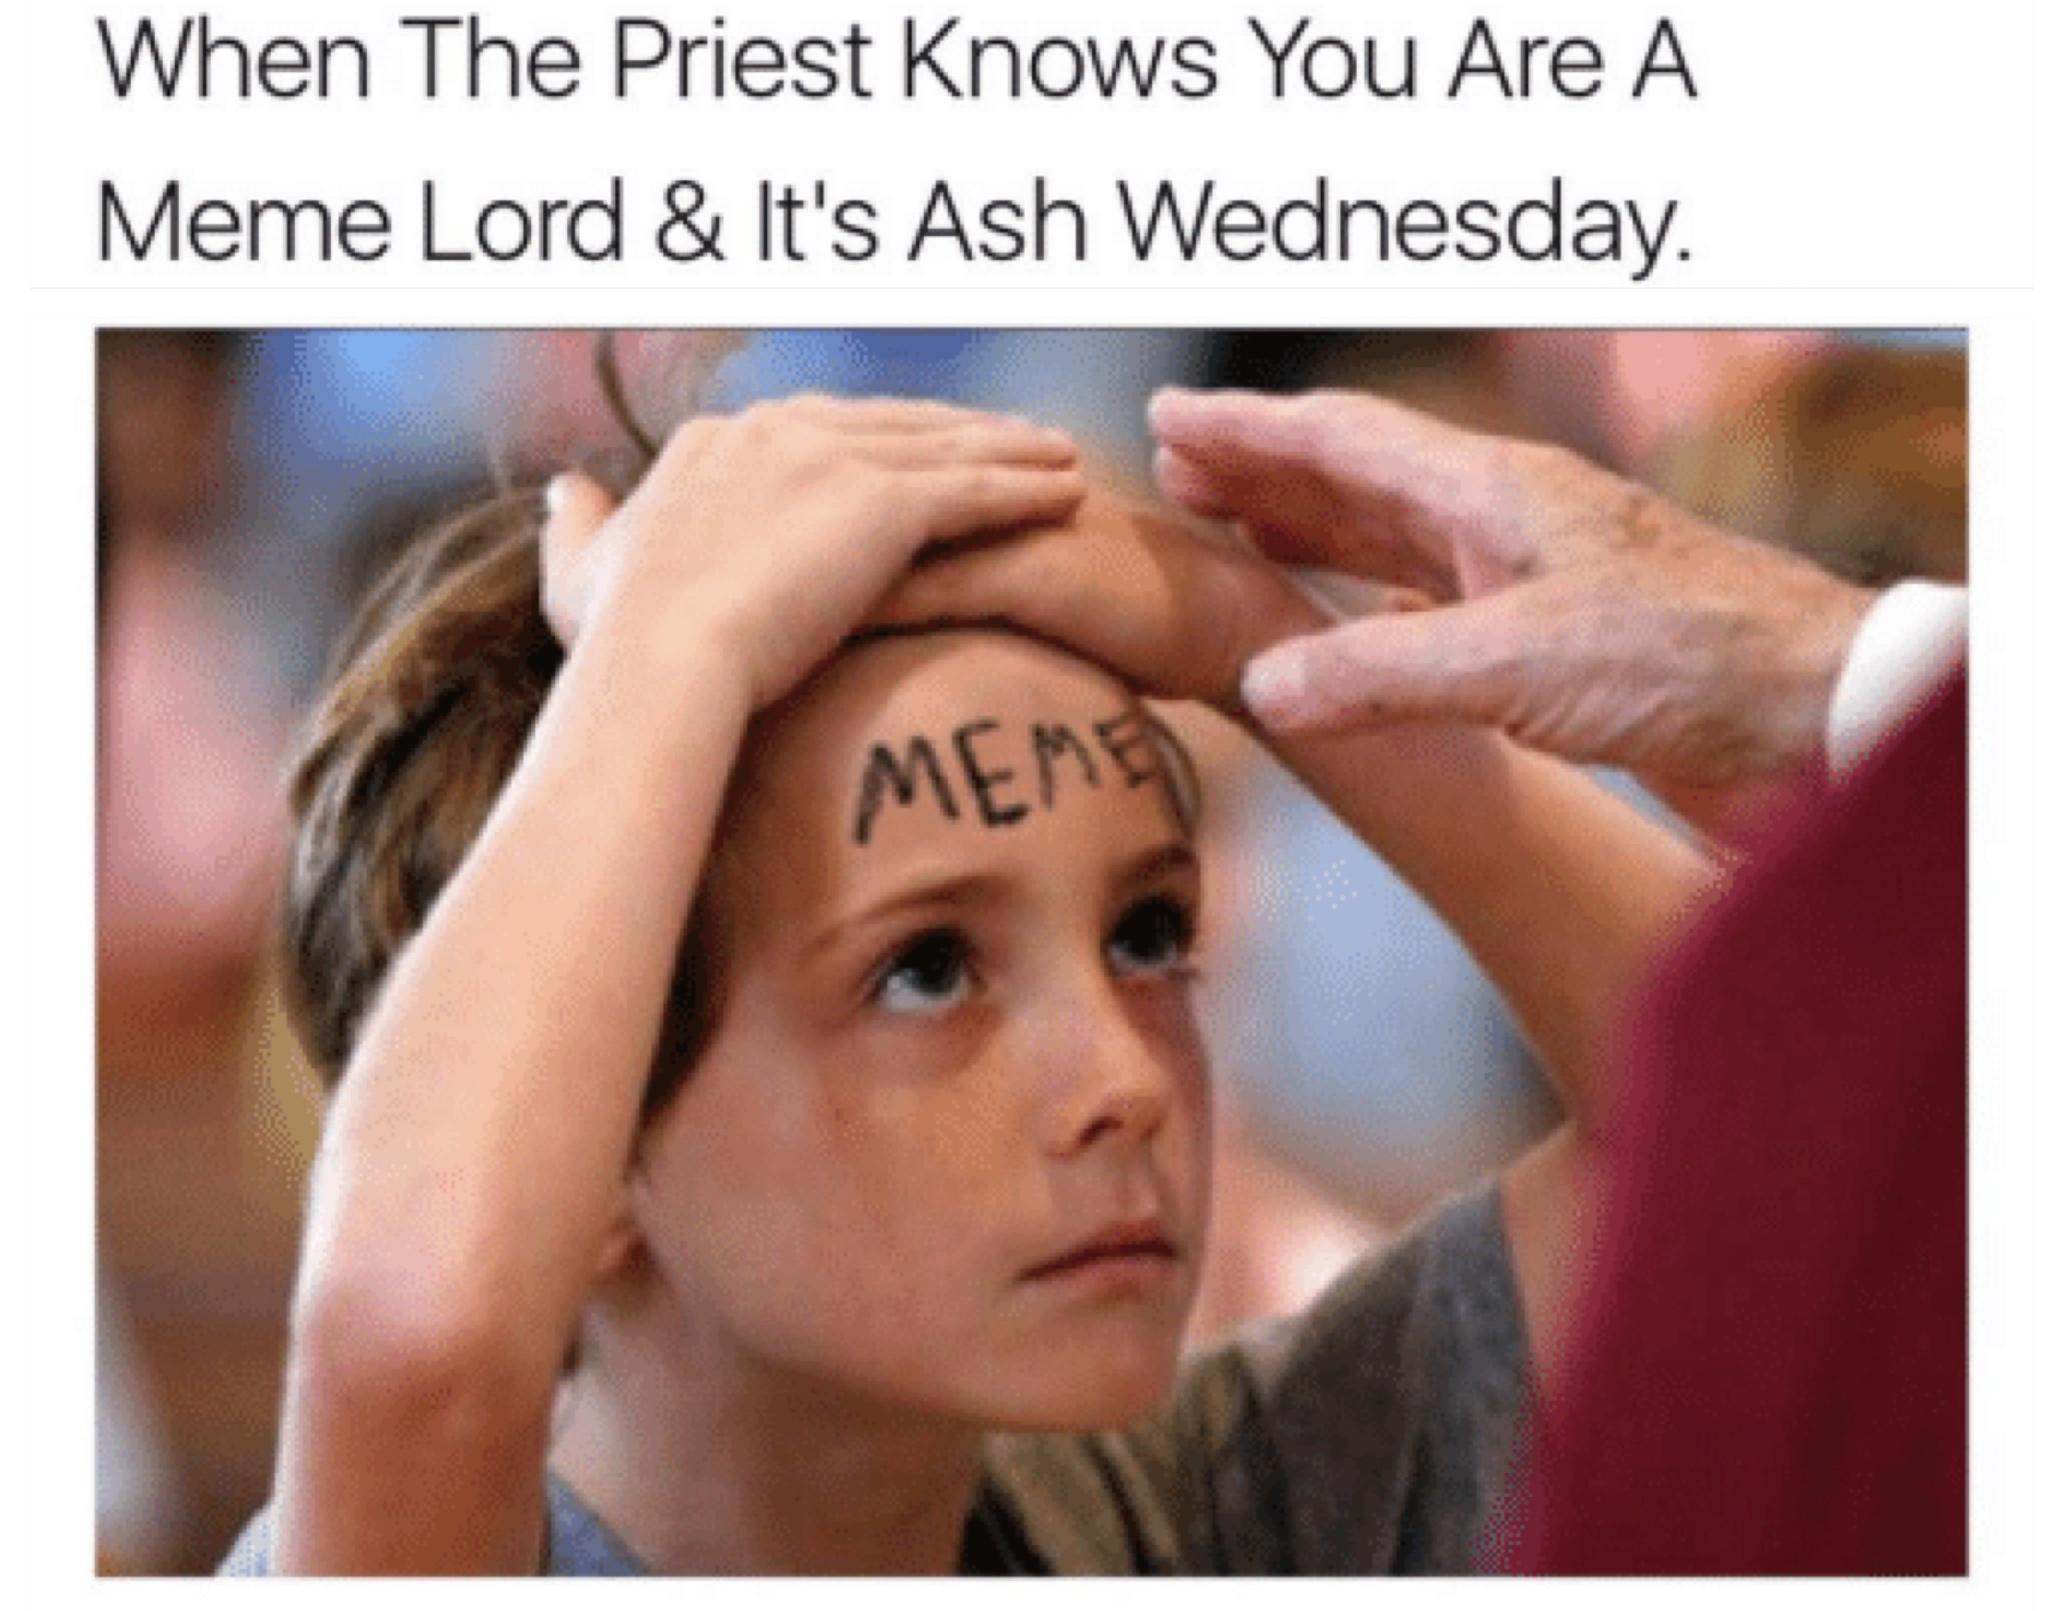 ash wednesday meme